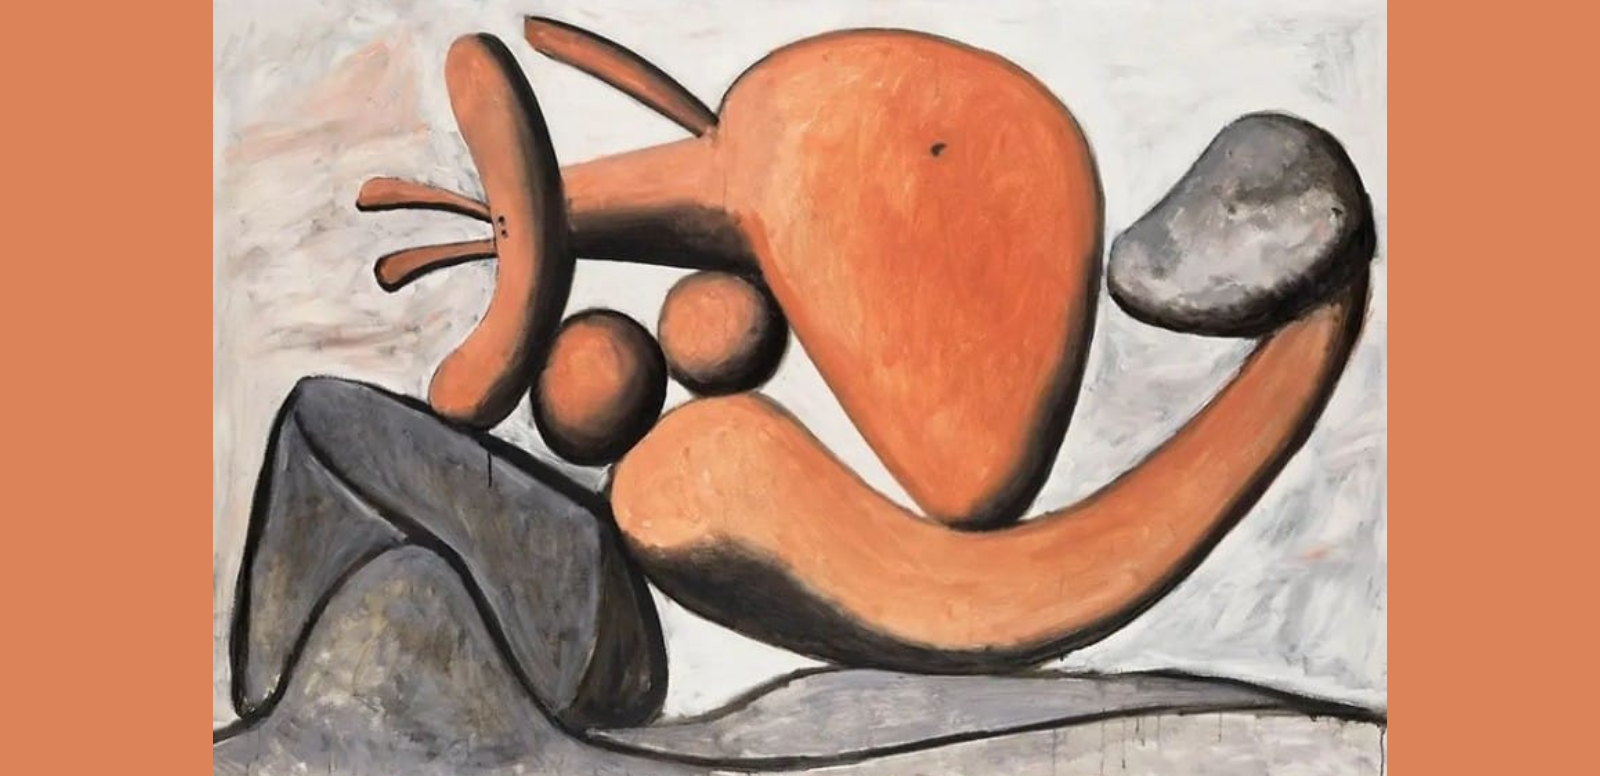 Pablo Picasso, "Mujer lanzando una piedra"